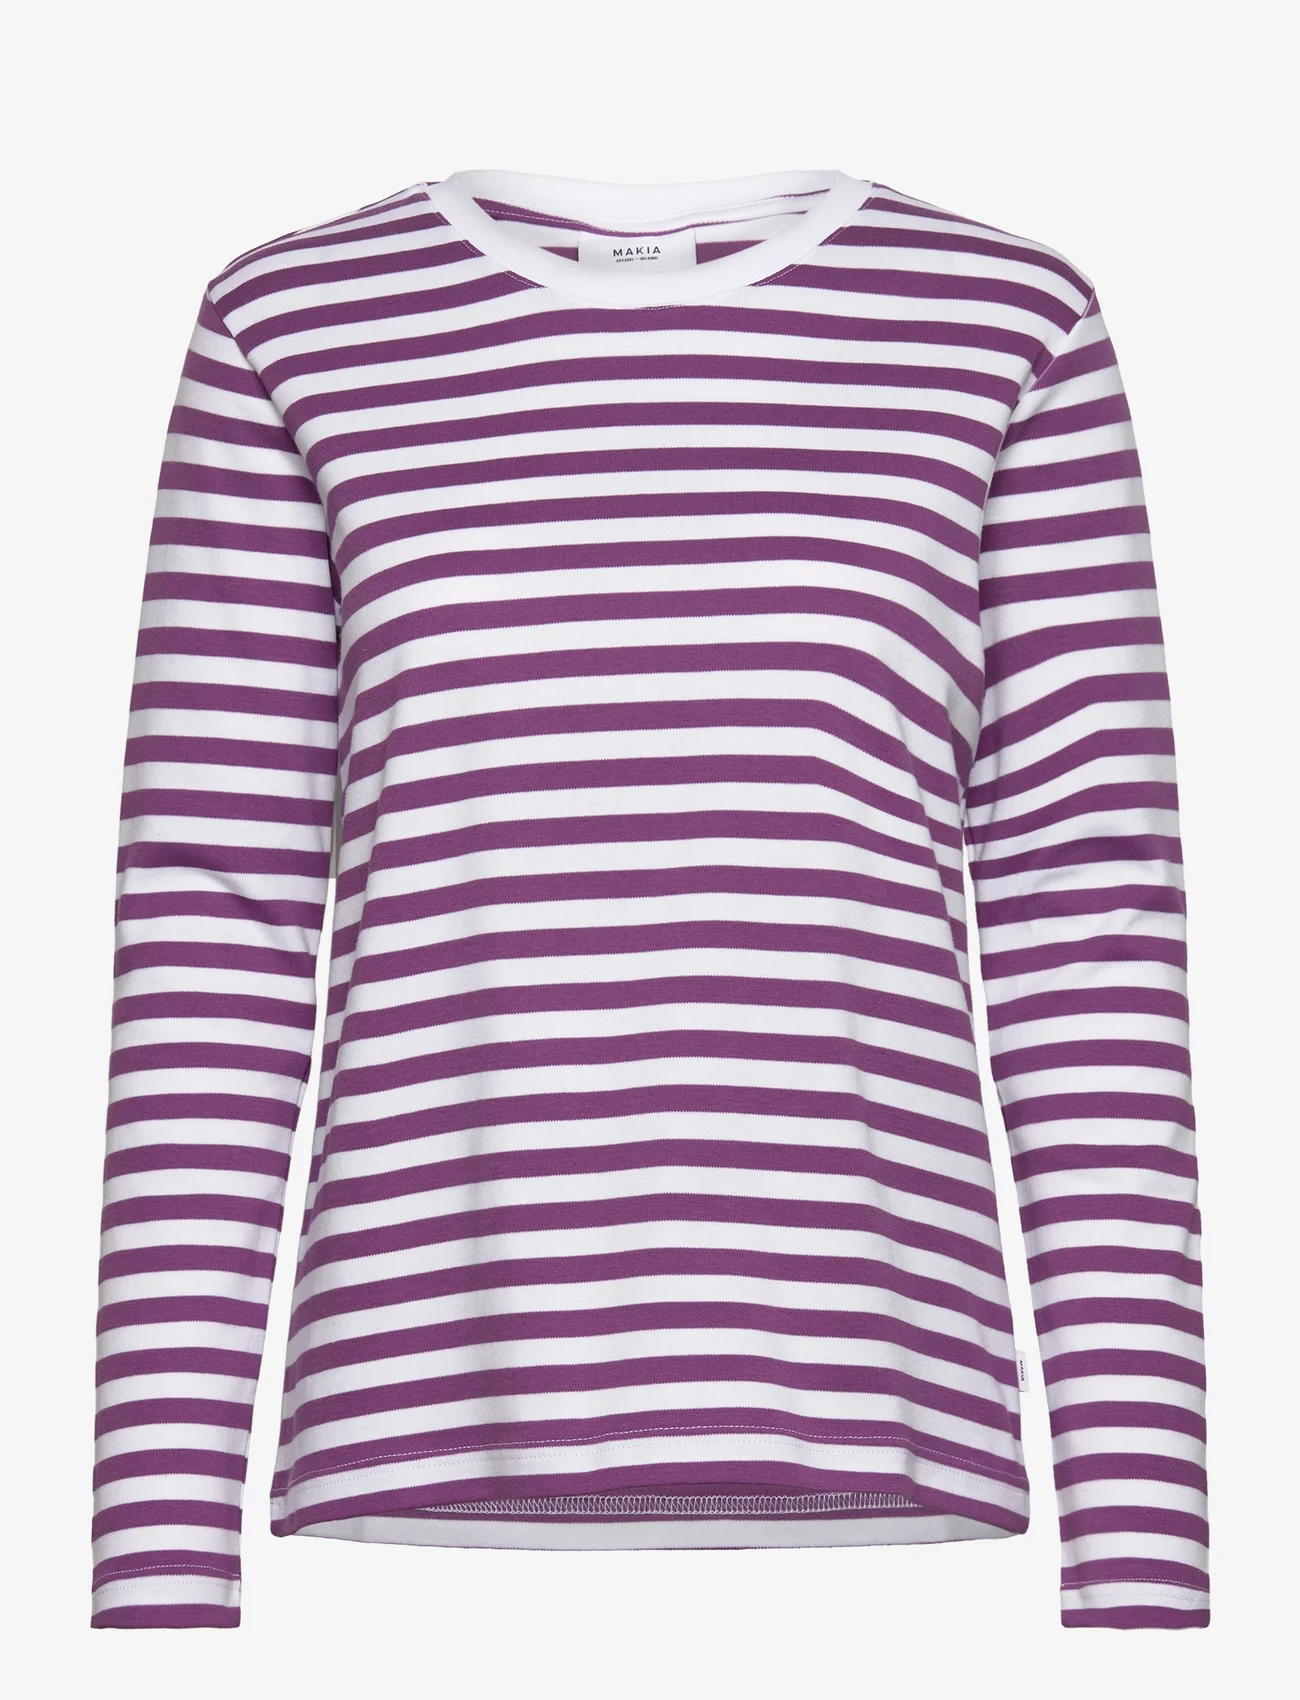 Makia - Verkstad Long Sleeve - tops met lange mouwen - purple-white - 0